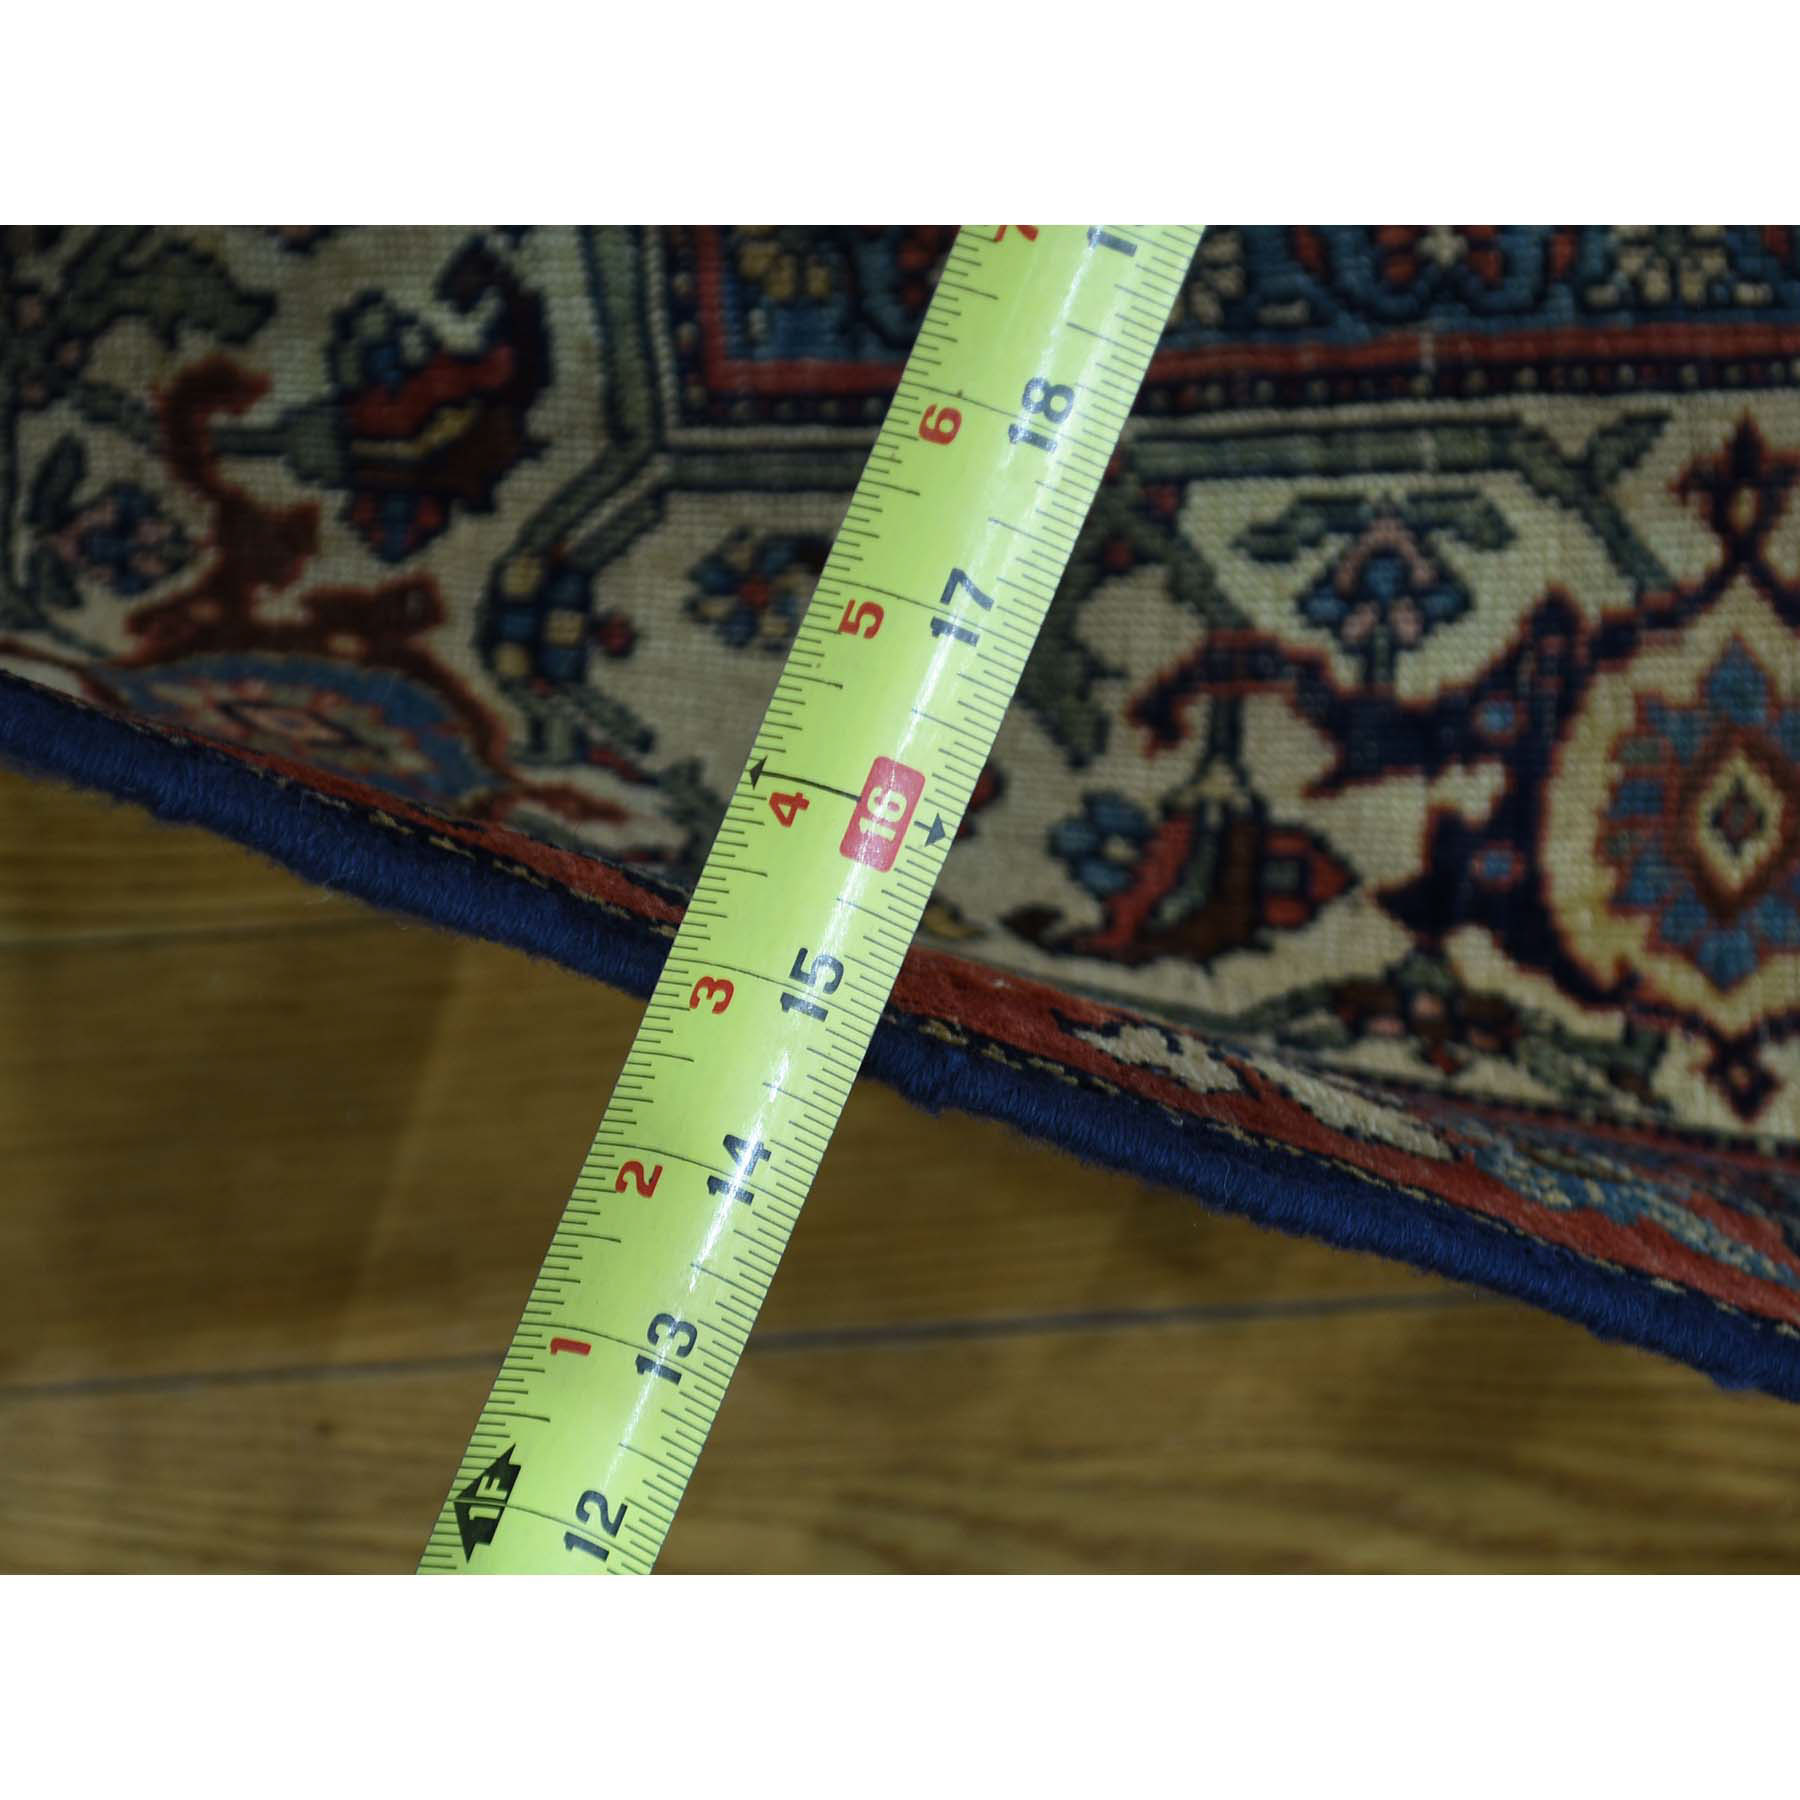 10-10 x19- Hand-Knotted Antique Persian Bijar Even Wear Oversize Rug 